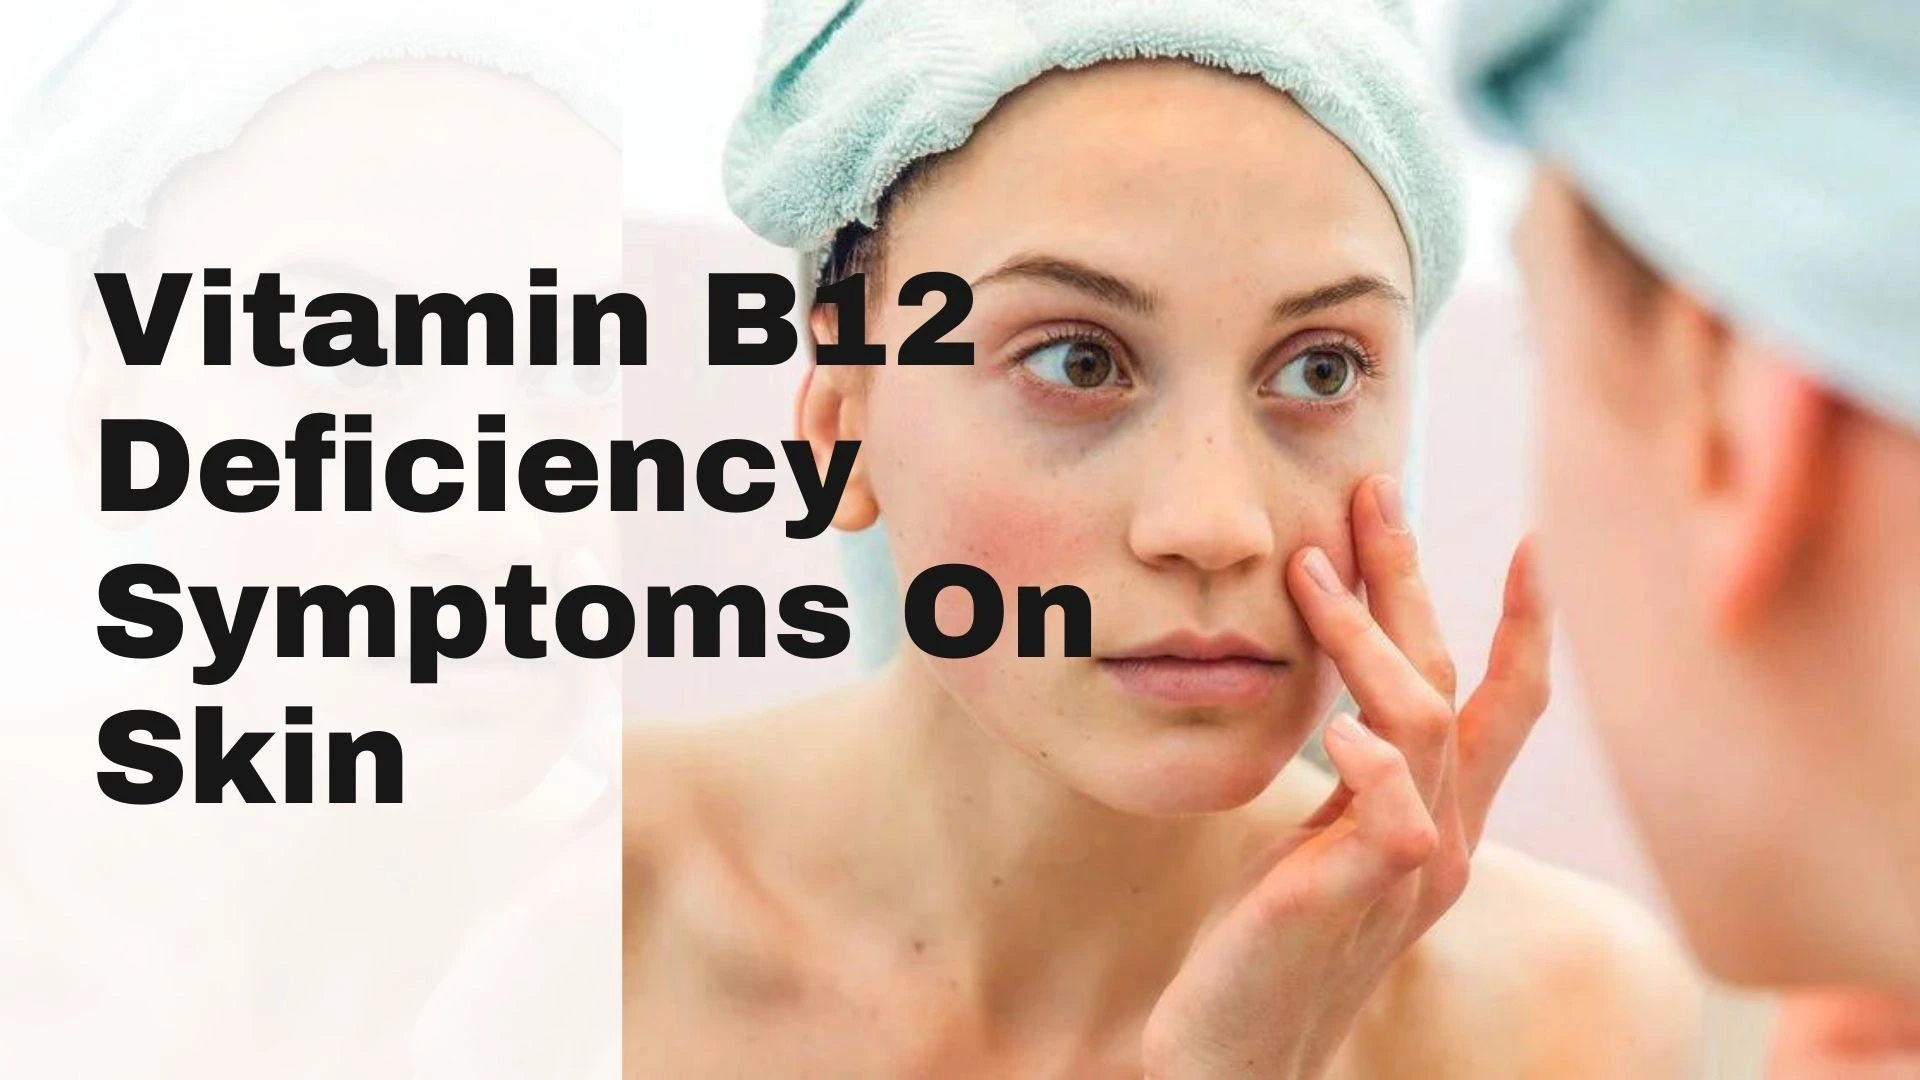 Vitamin B12 Deficiency Symptoms On Skin